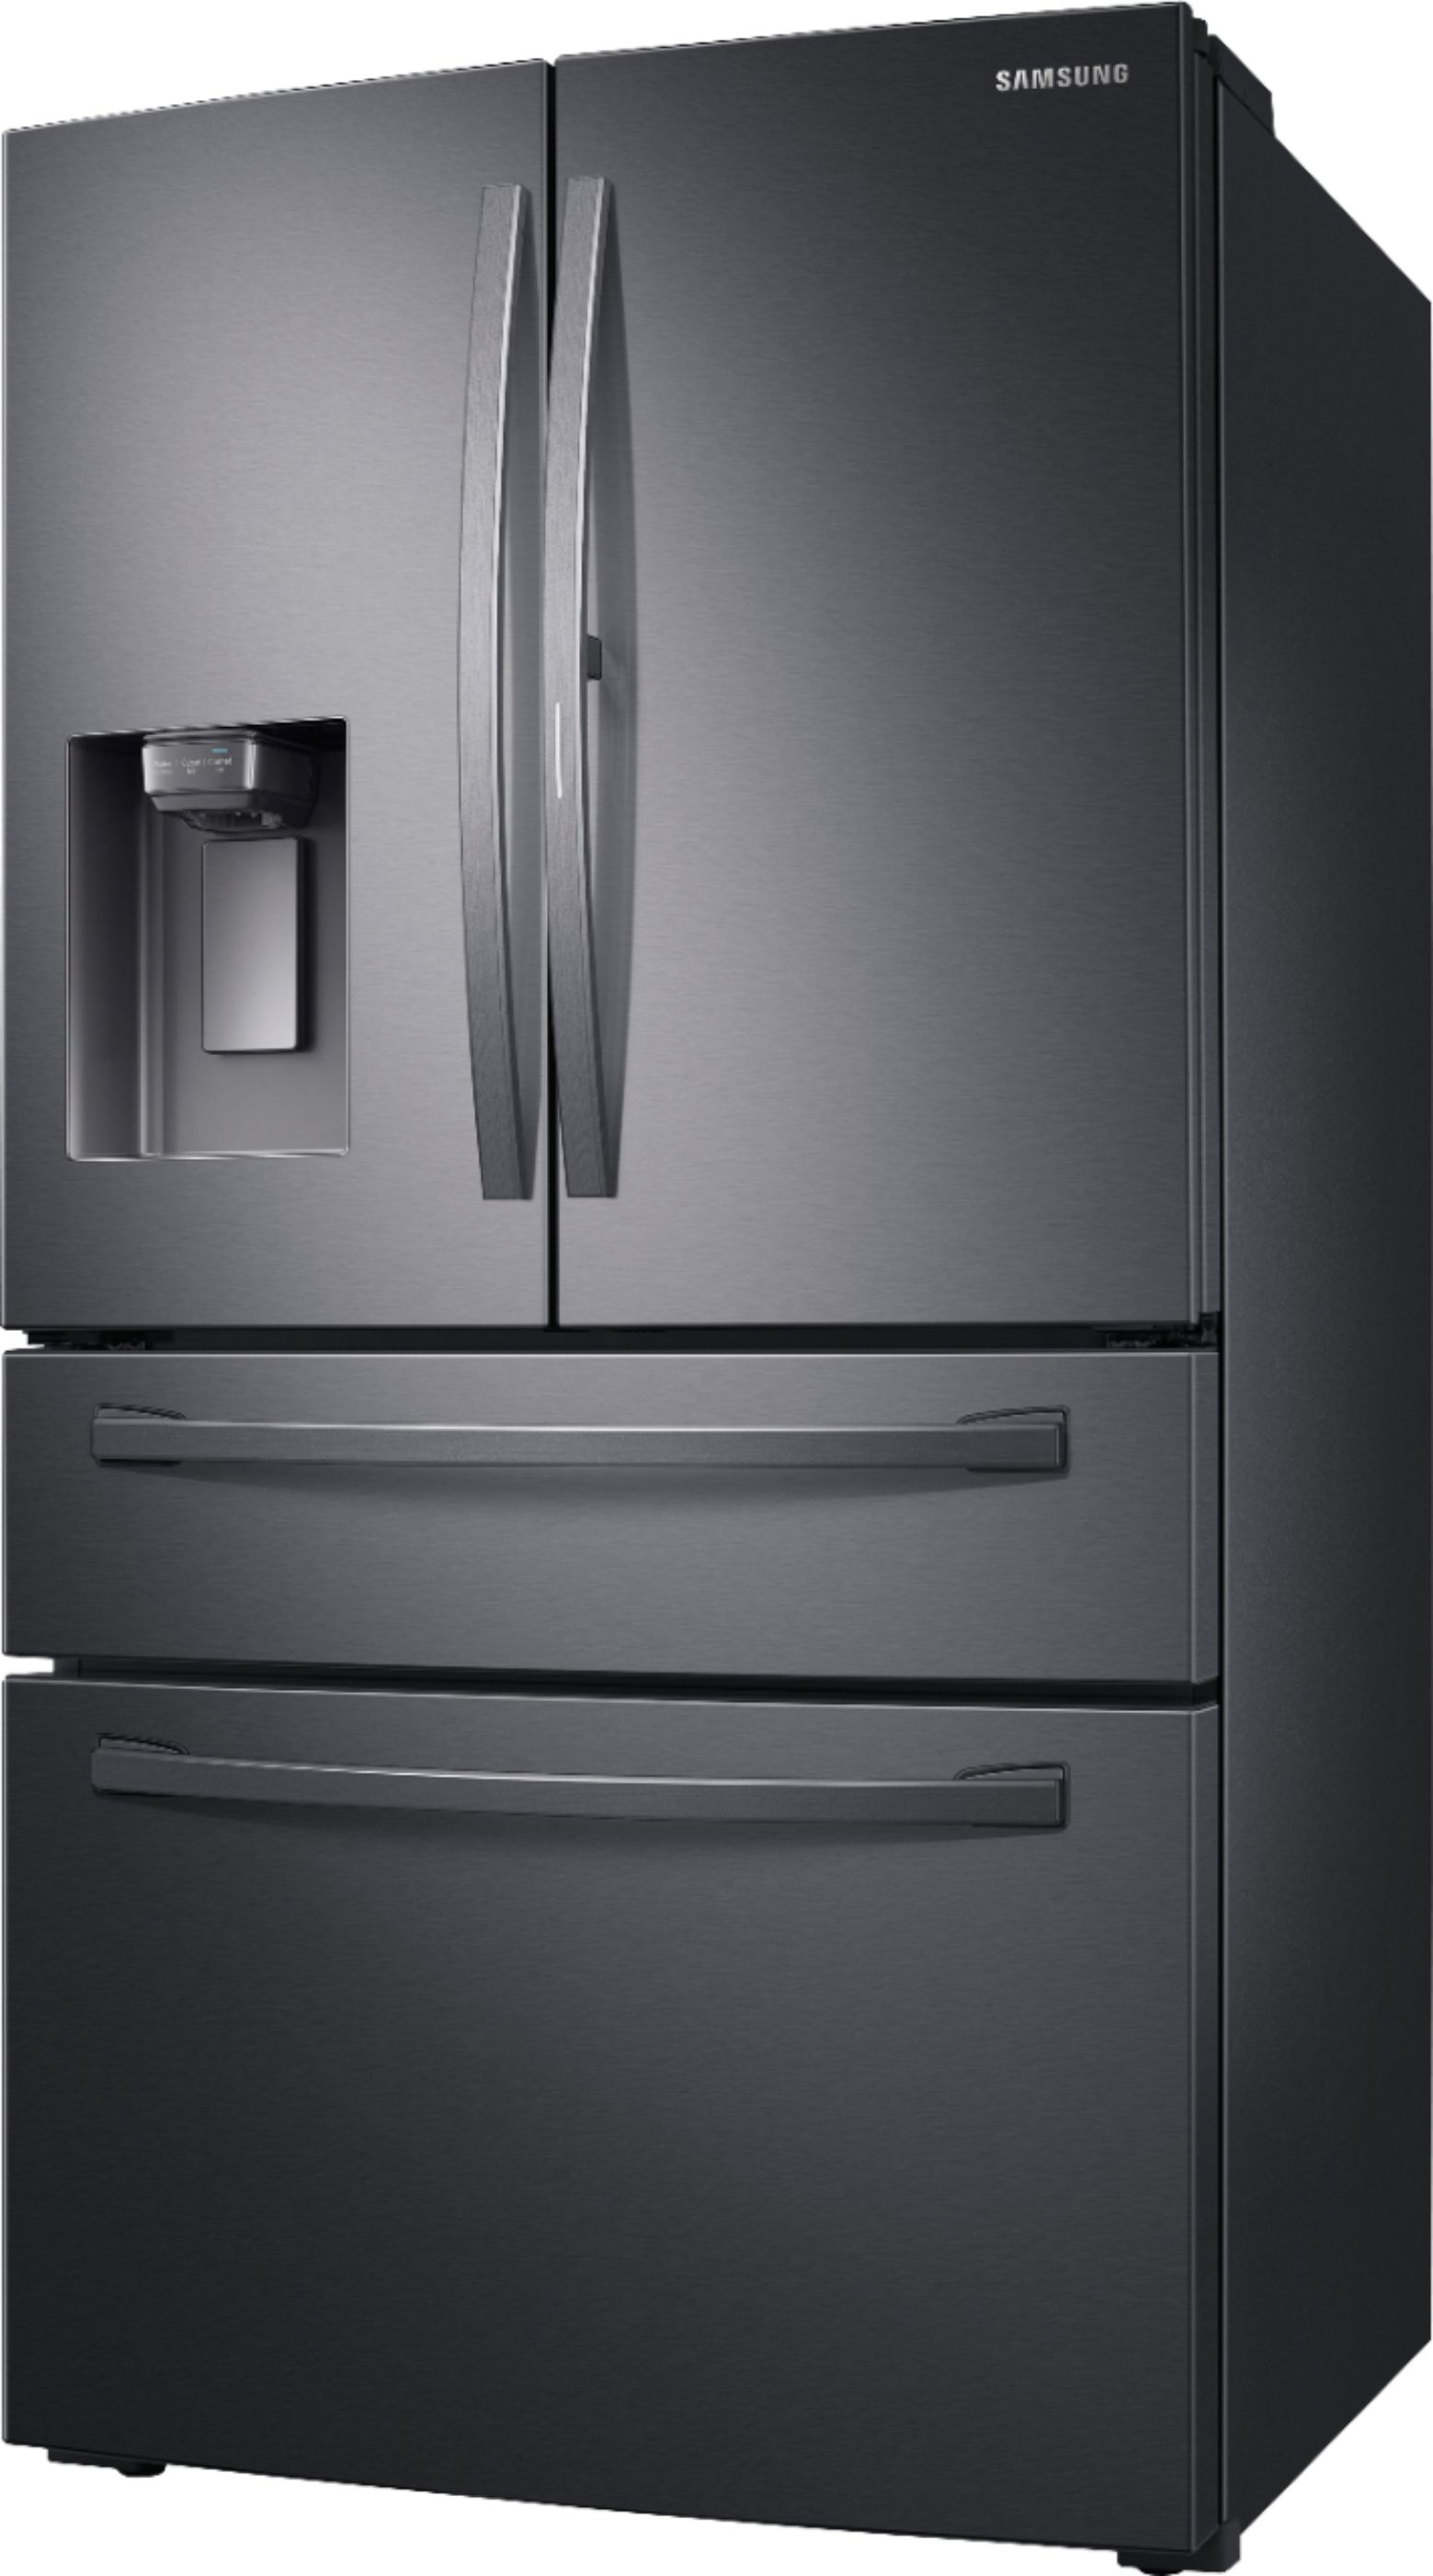 Left View: Samsung - 22.4 cu. ft. 4-Door French Door Counter Depth Refrigerator with Food Showcase - Black stainless steel